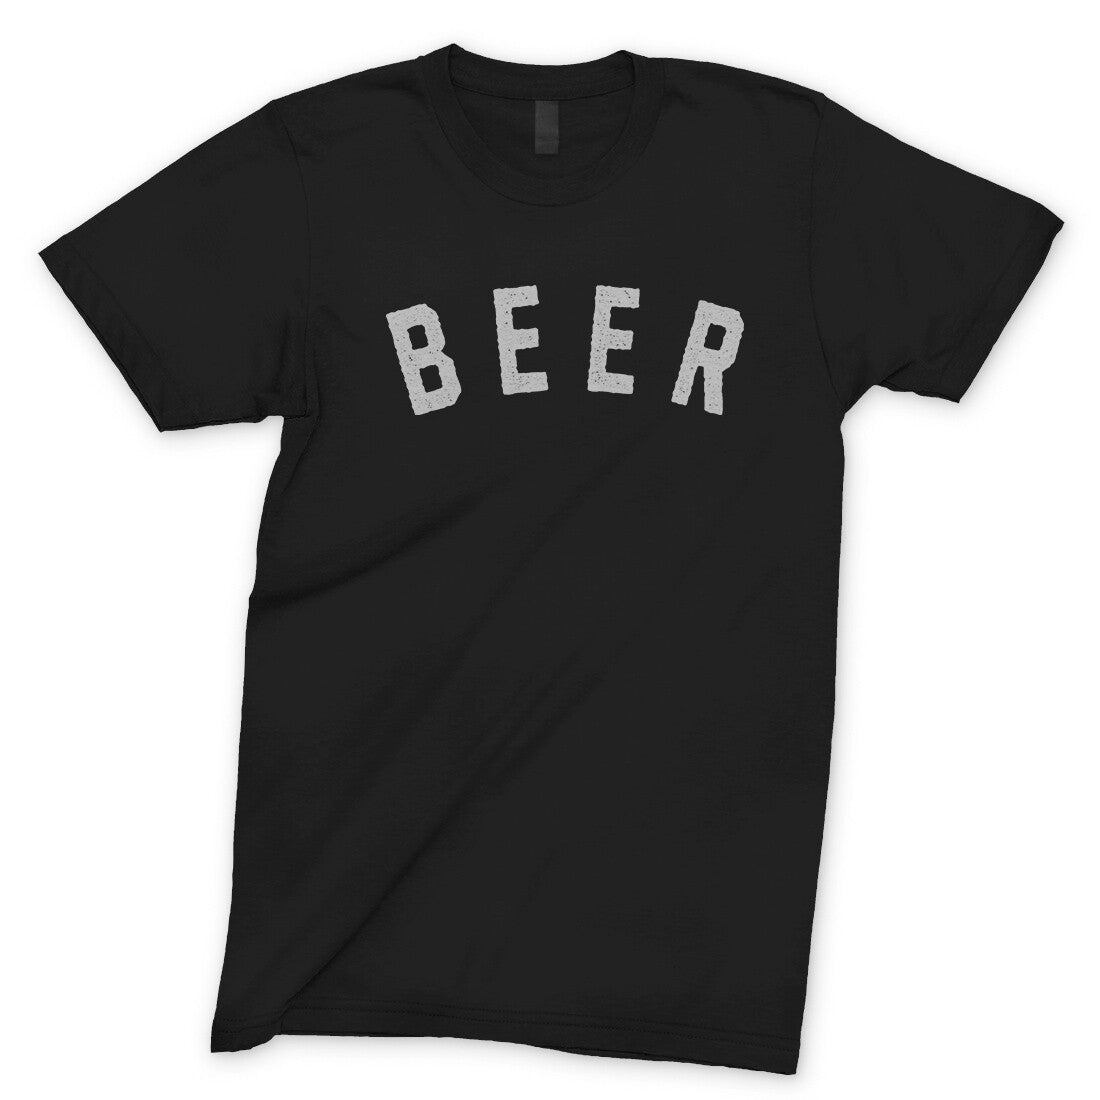 Beer in Black Color